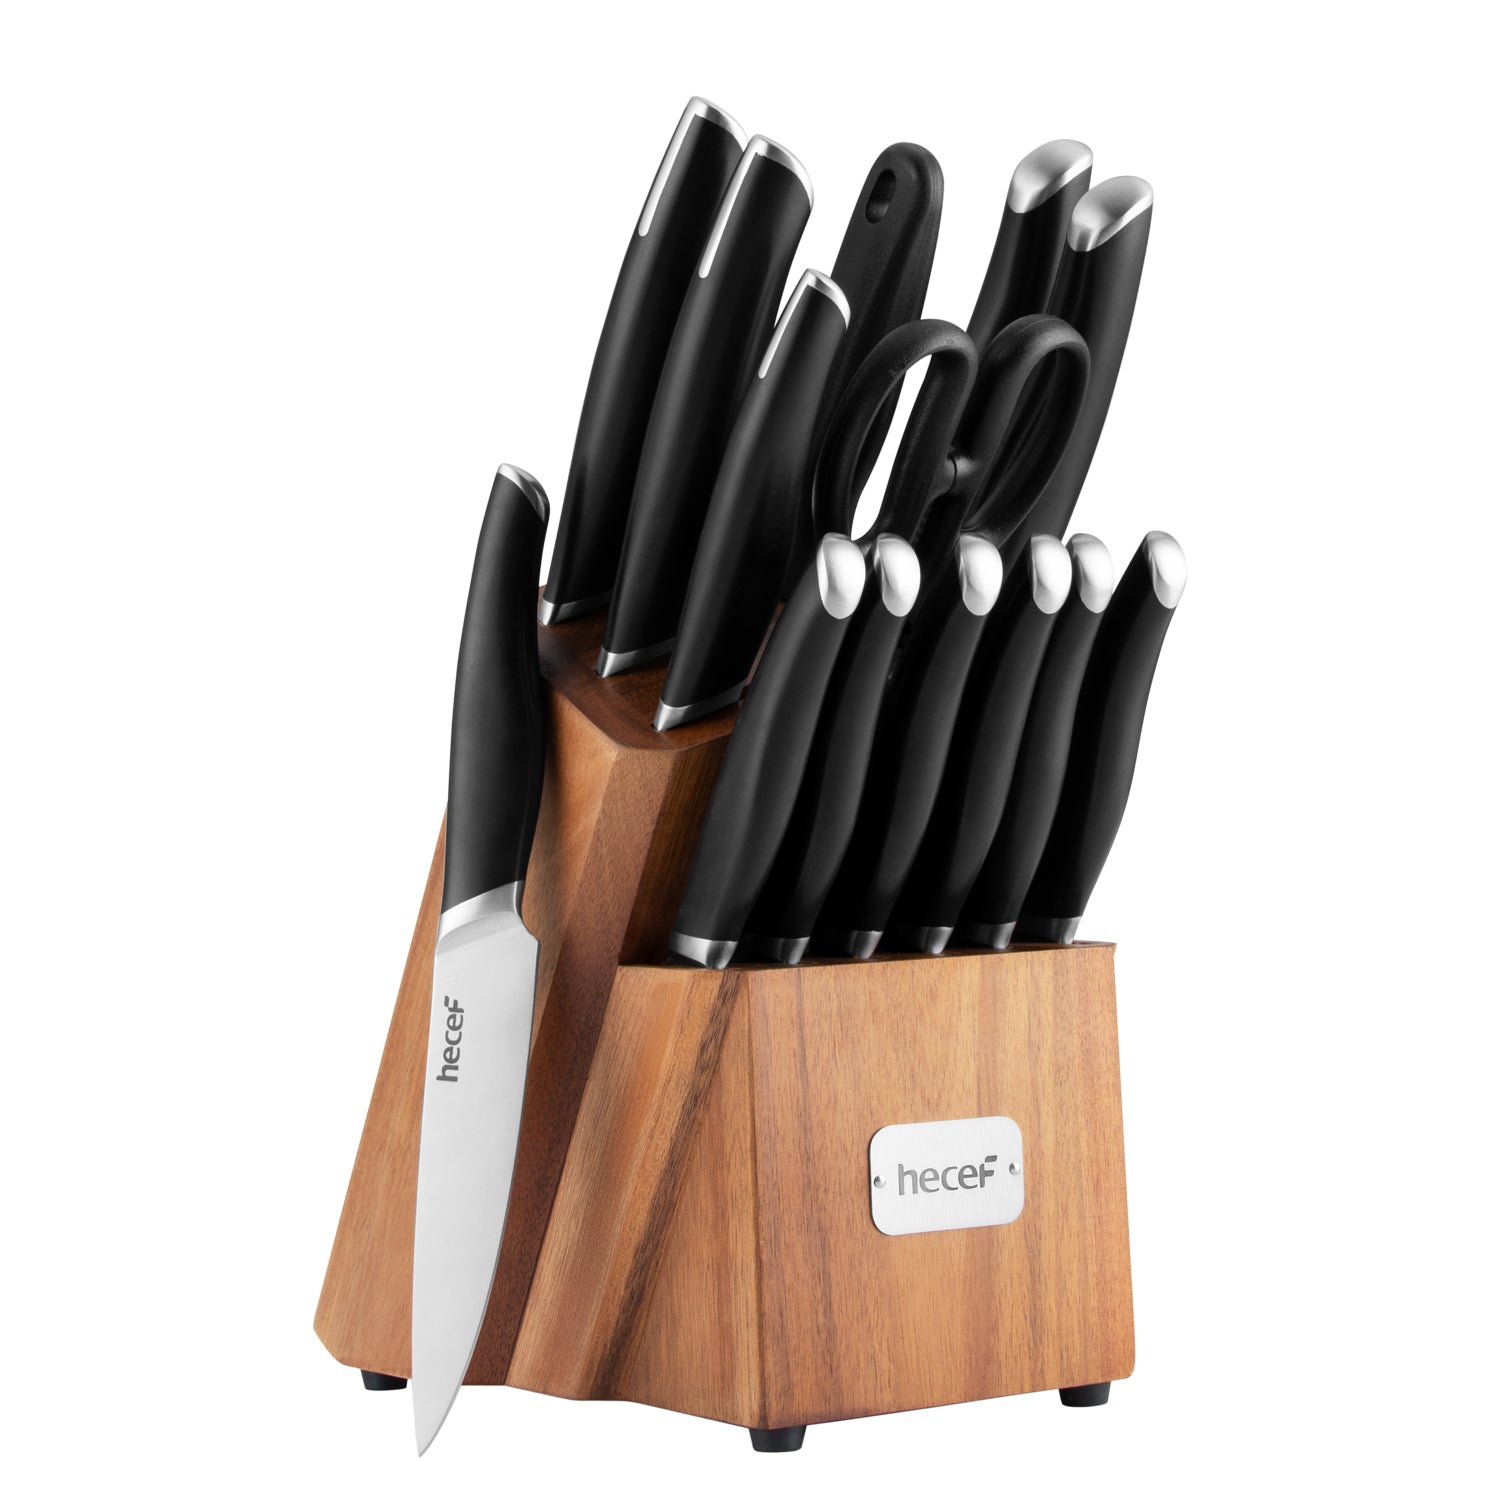 15Pcs Profession German Steel Chef Sharp Knife Set Wood Stand Kitchen Knives Scissor Storage  Cooking Chef Knife - Hecef Kitchen